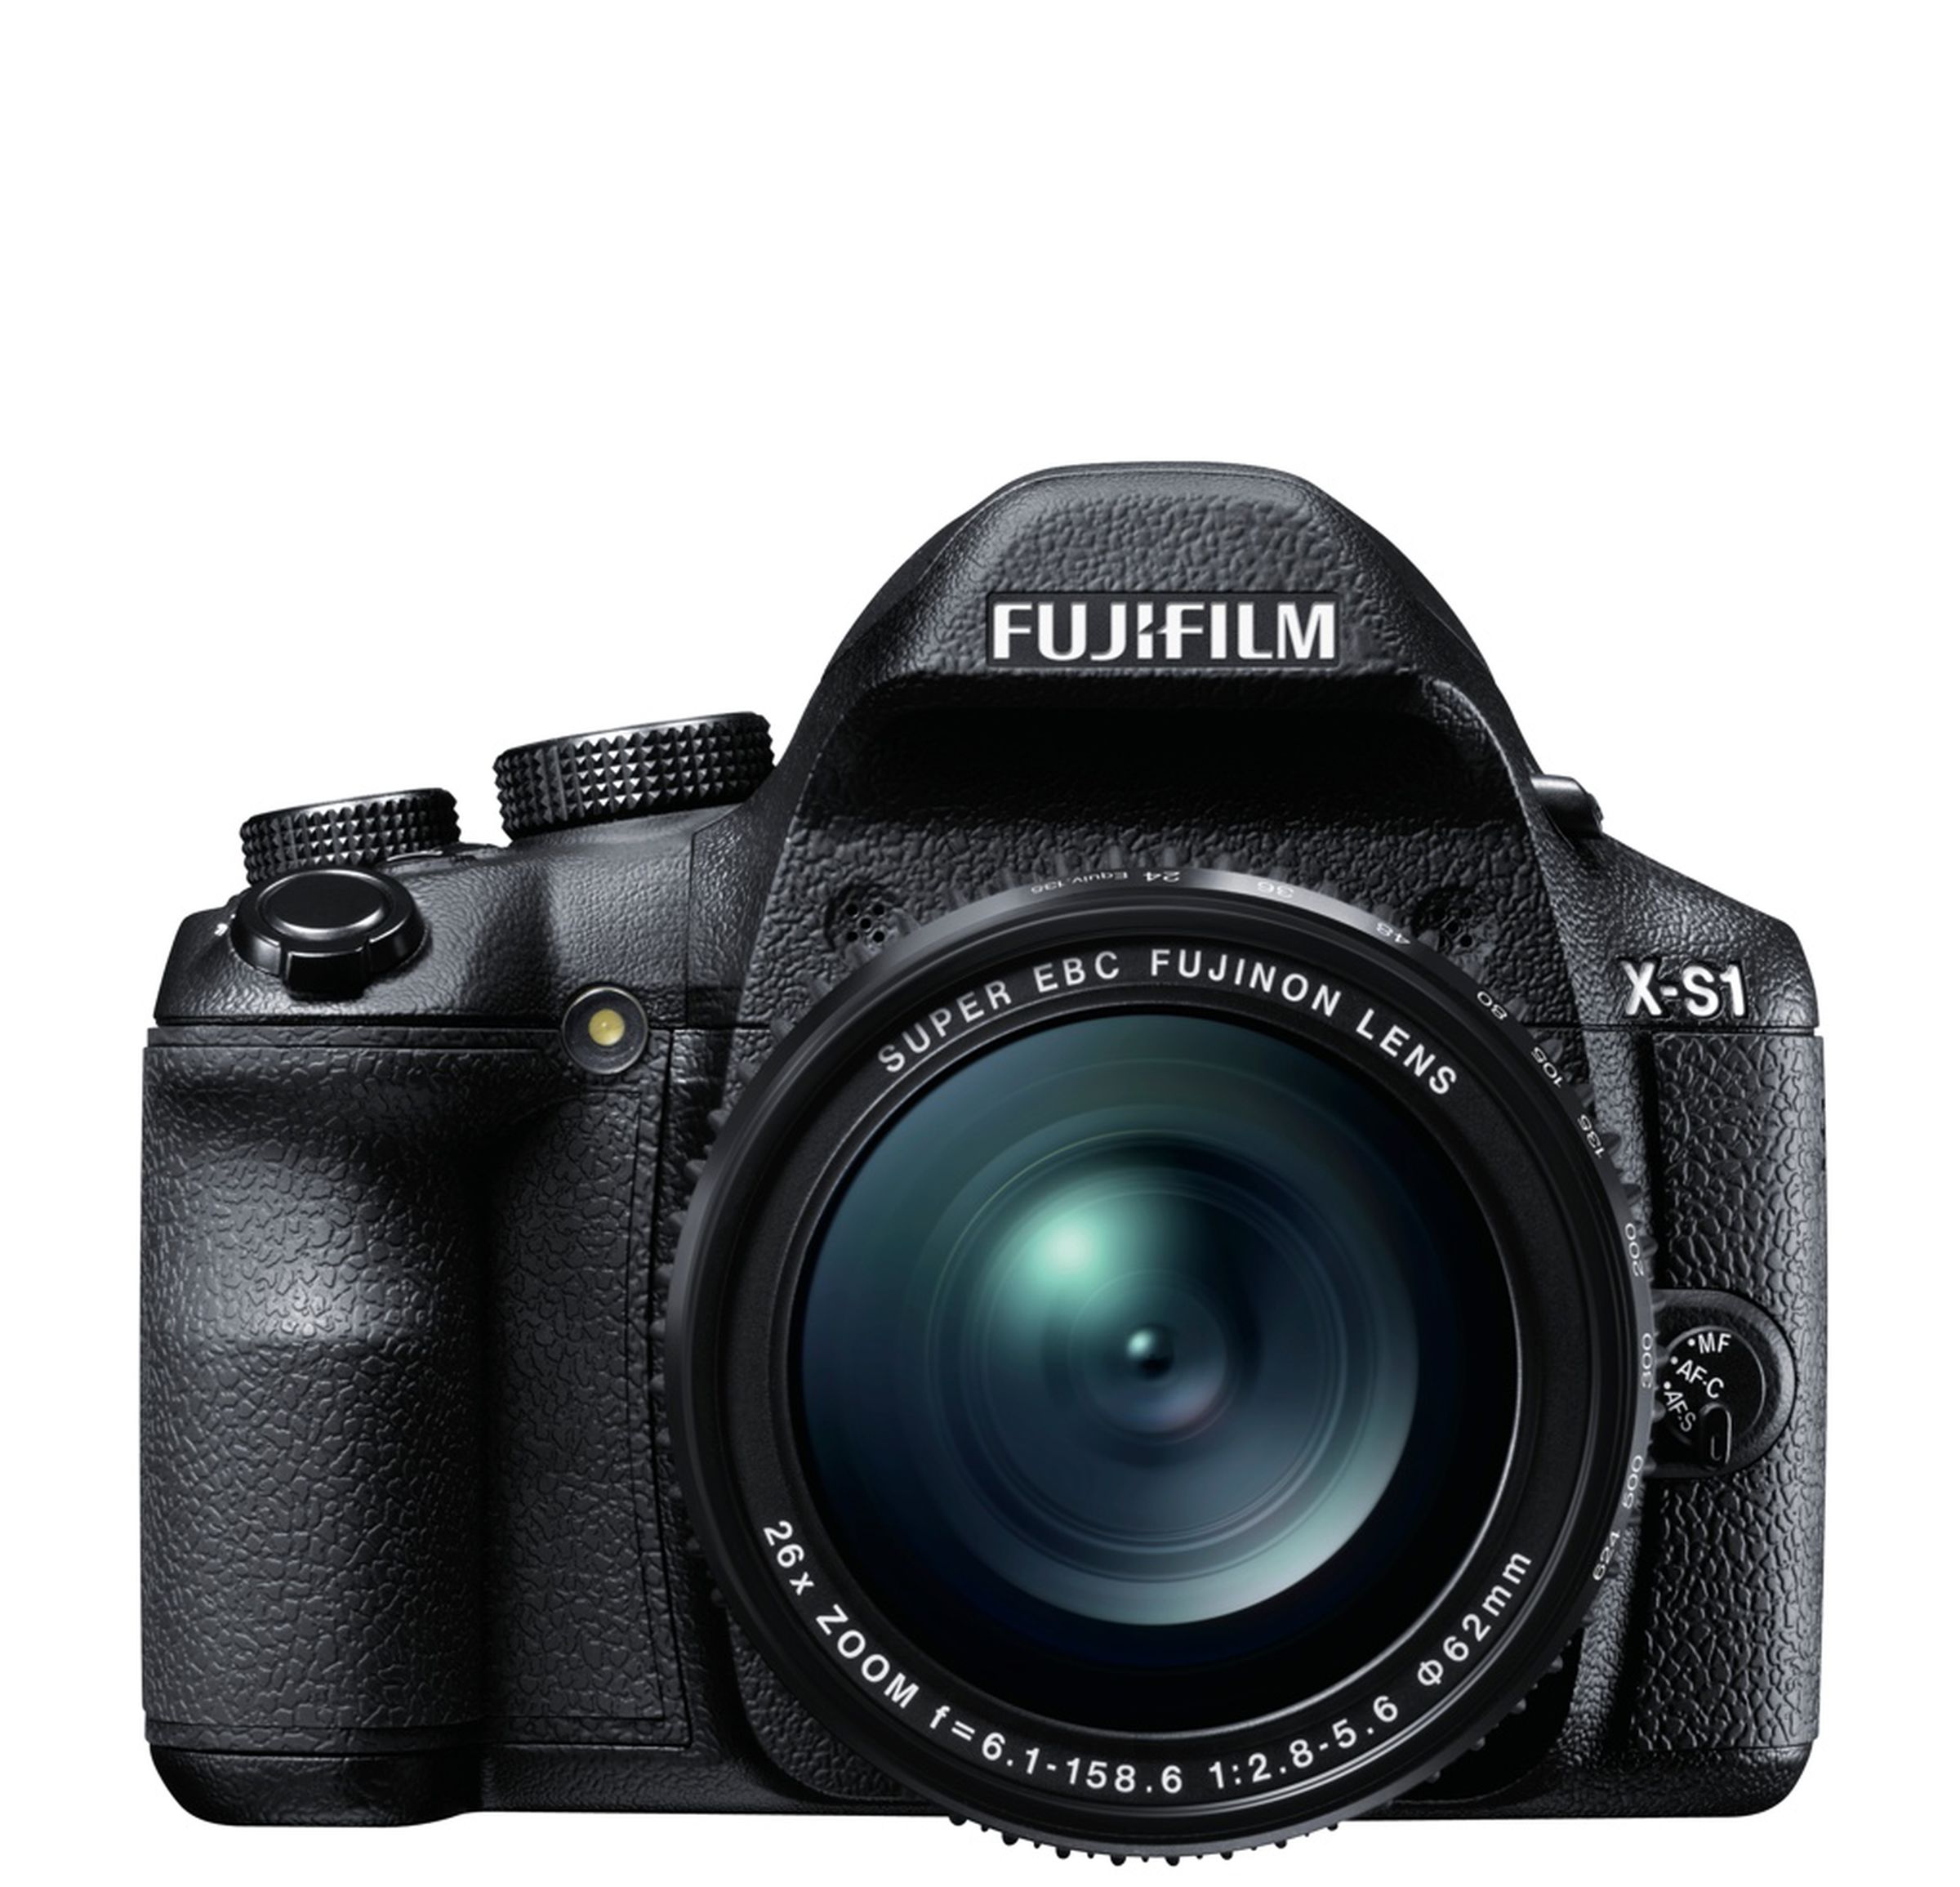 Fujifilm X-S1 press gallery